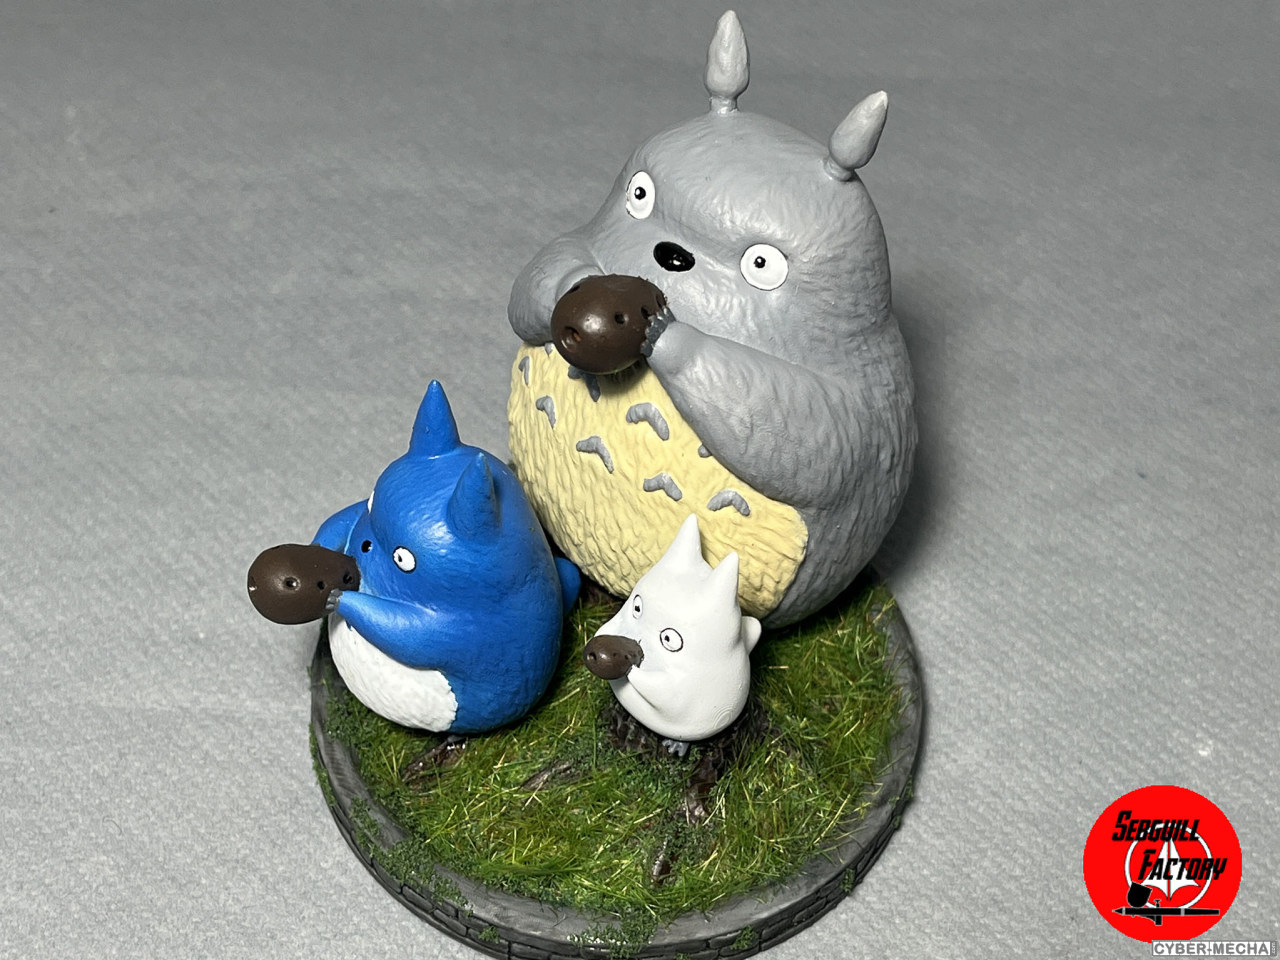 Print 3D : Totoro 1701076848